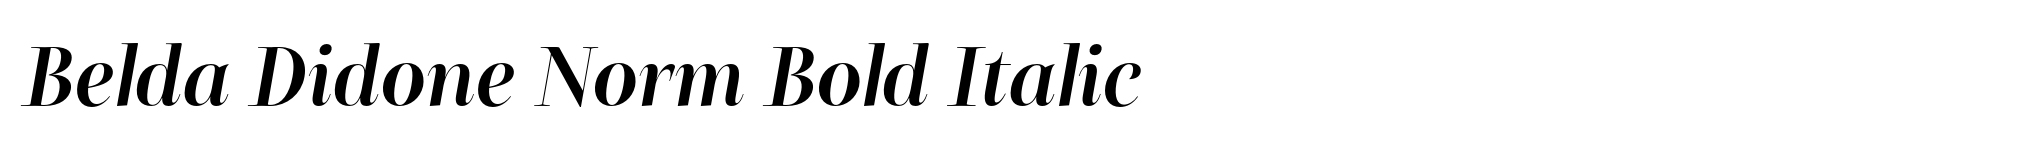 Belda Didone Norm Bold Italic image